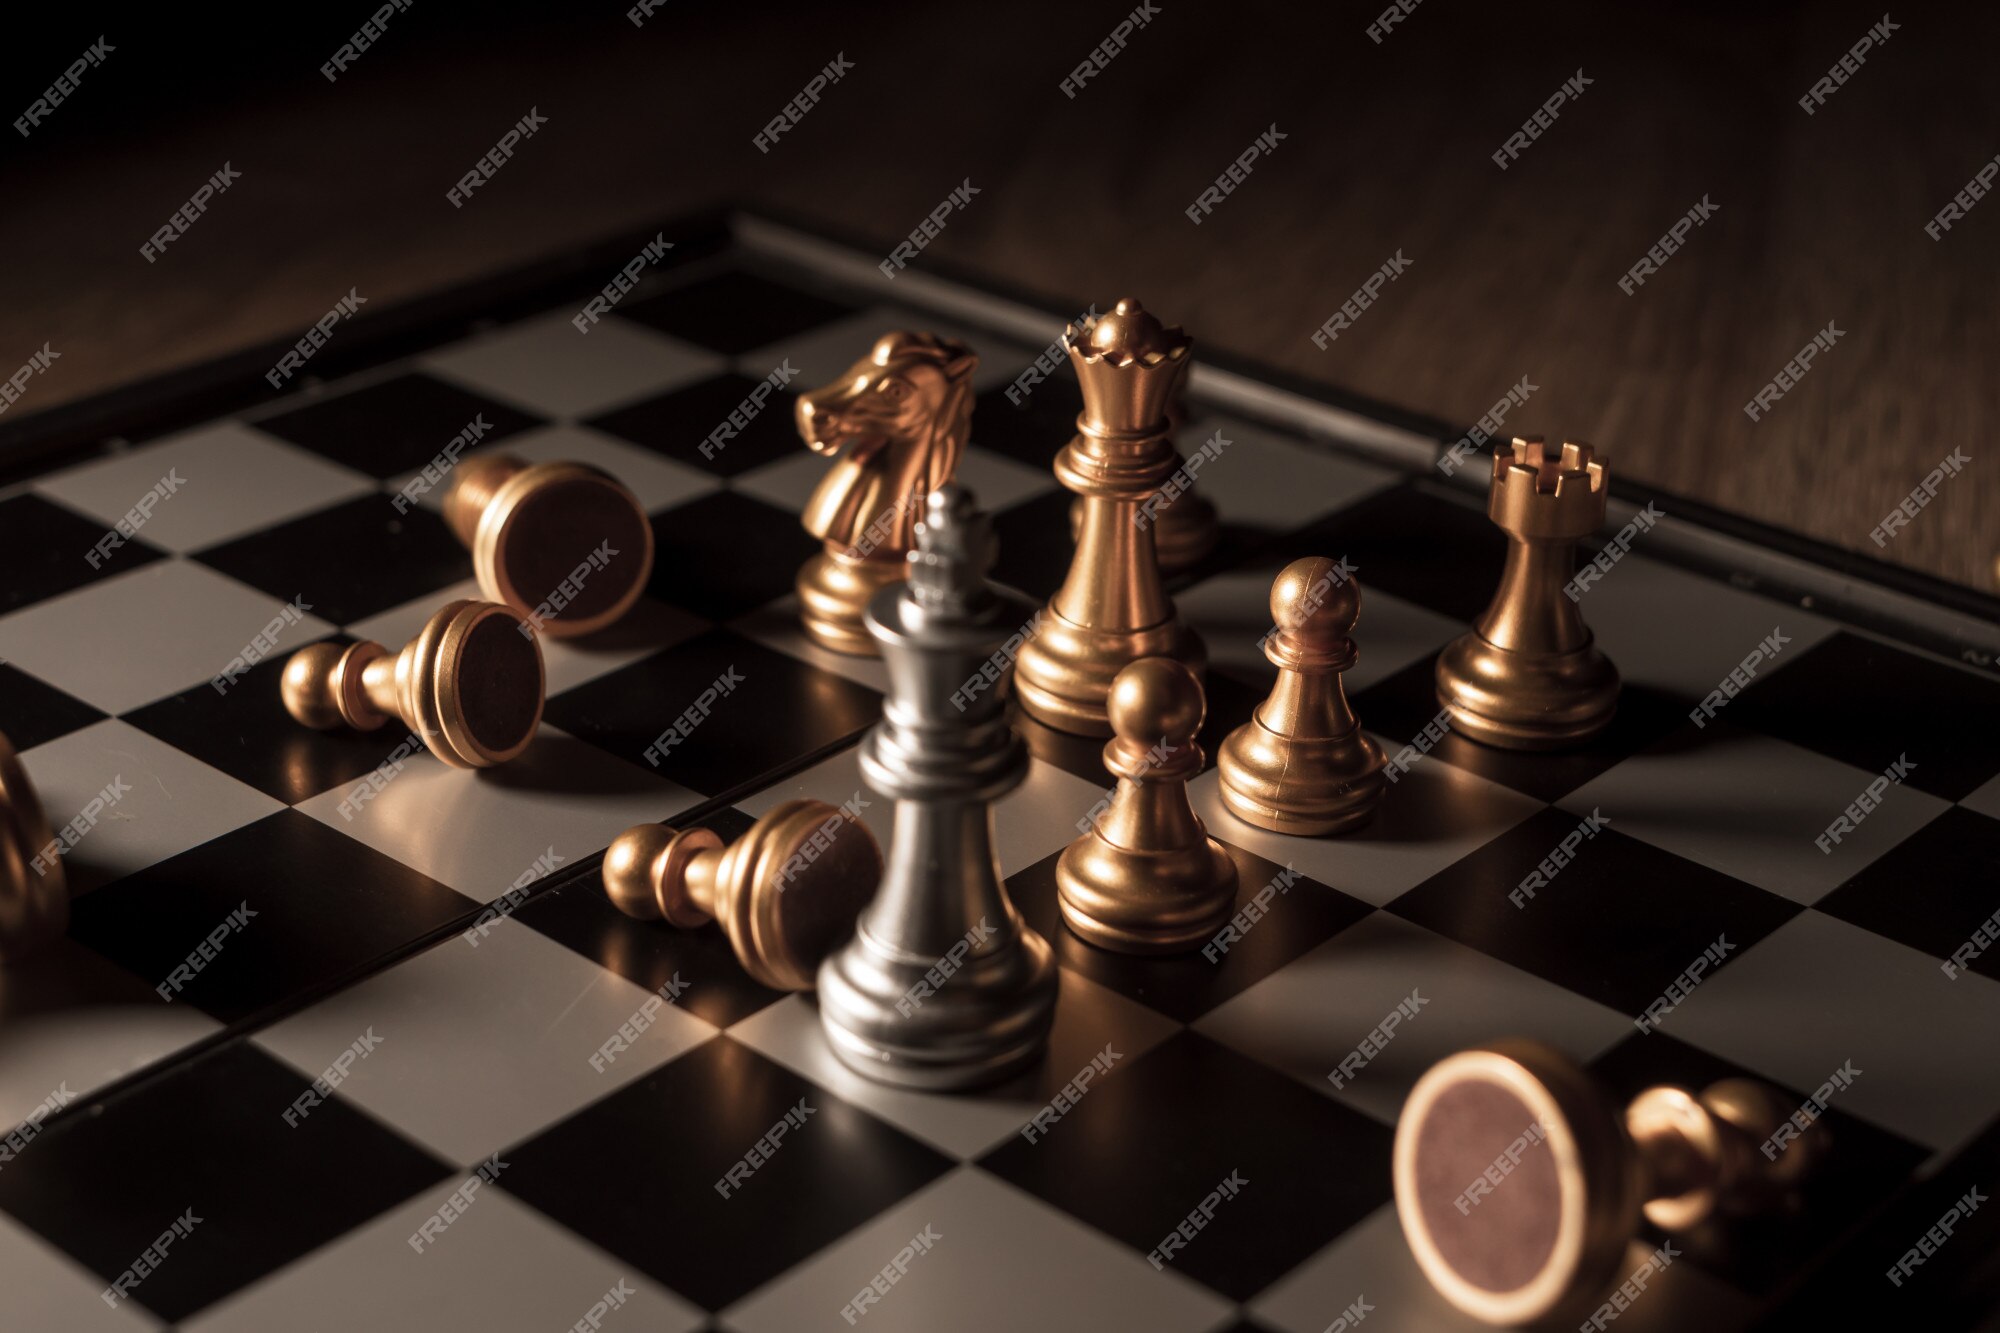 Premium AI Image  Closeup shot of the king chess piece leading